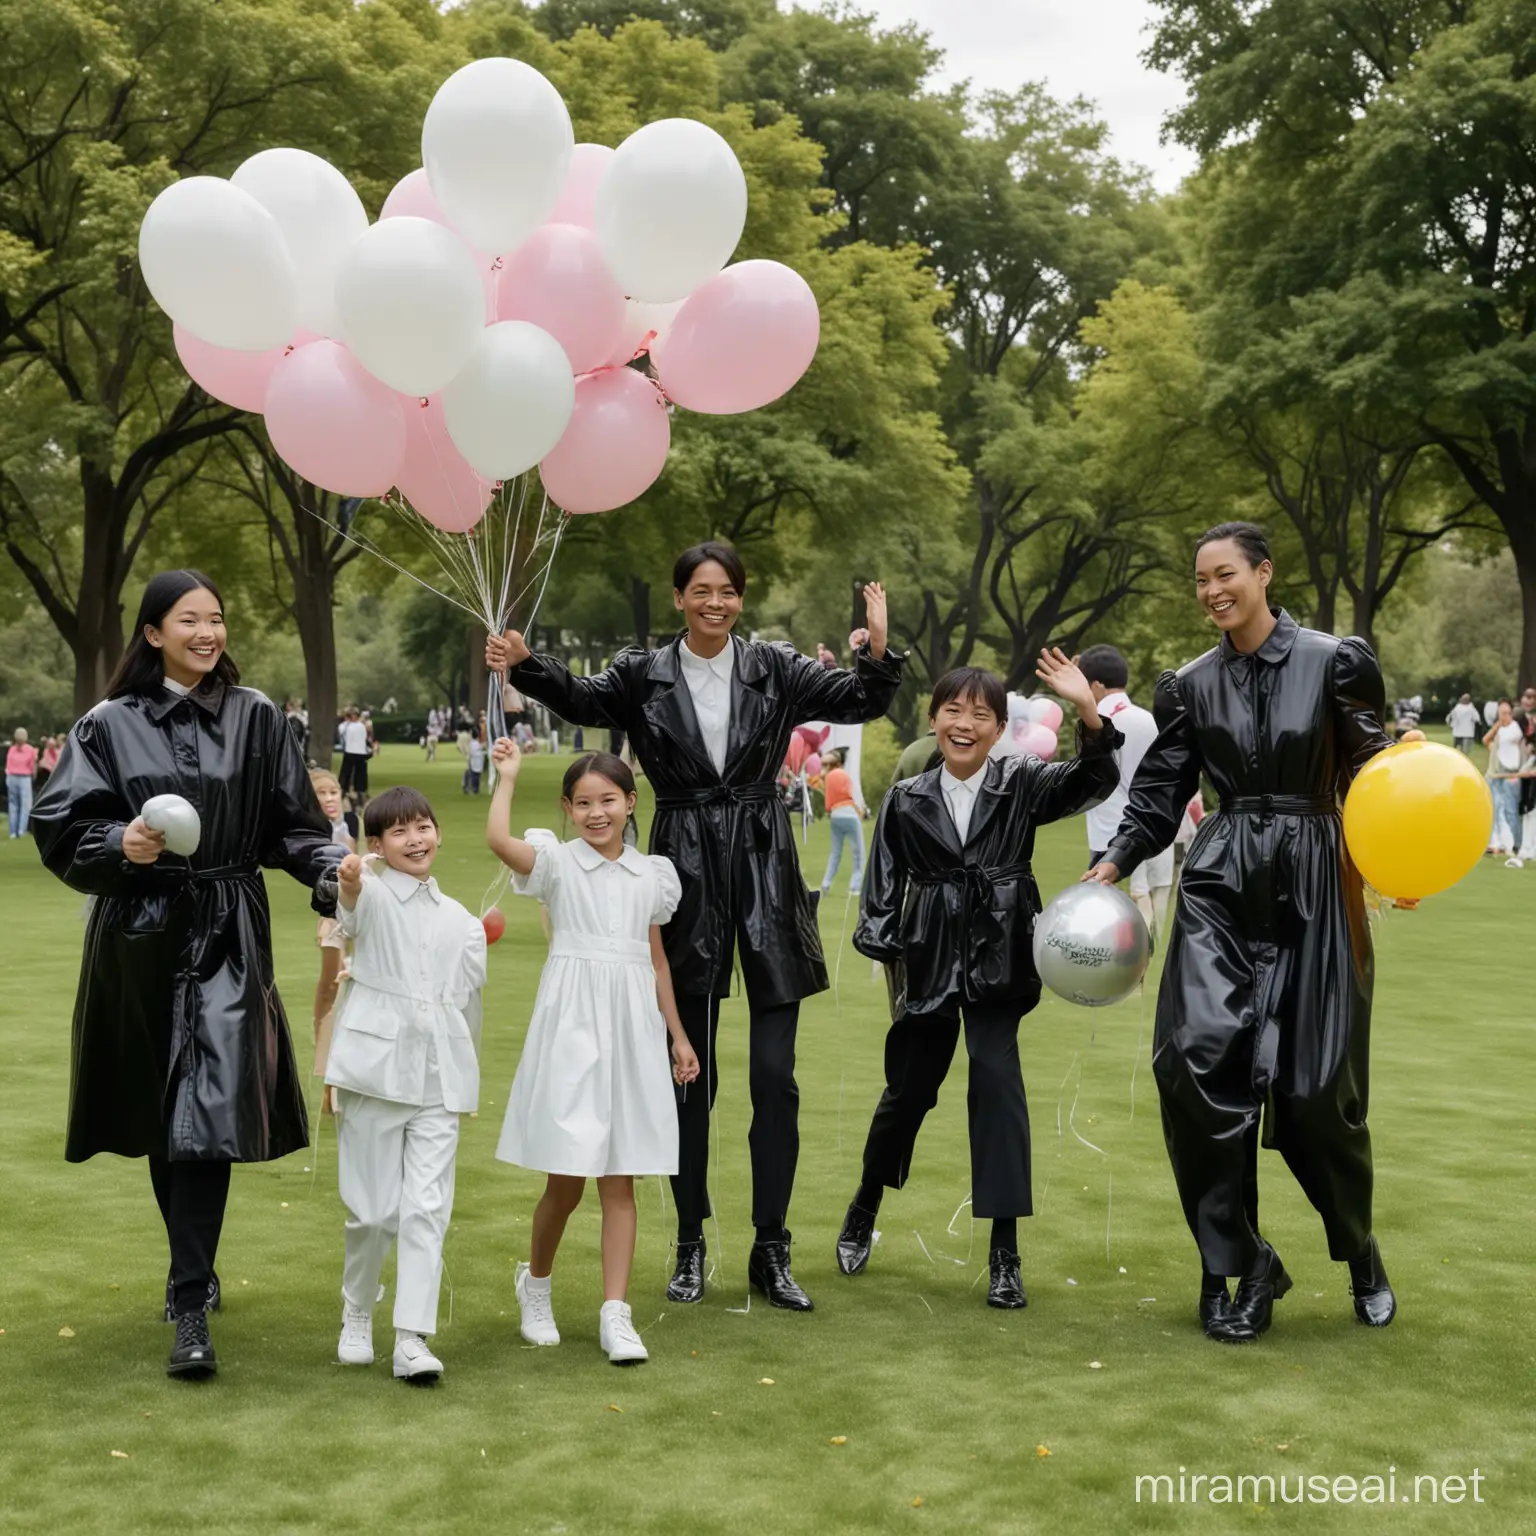 Balenciaga Fashion Campaign Stylish Families Enjoying Balloon Play in the Park